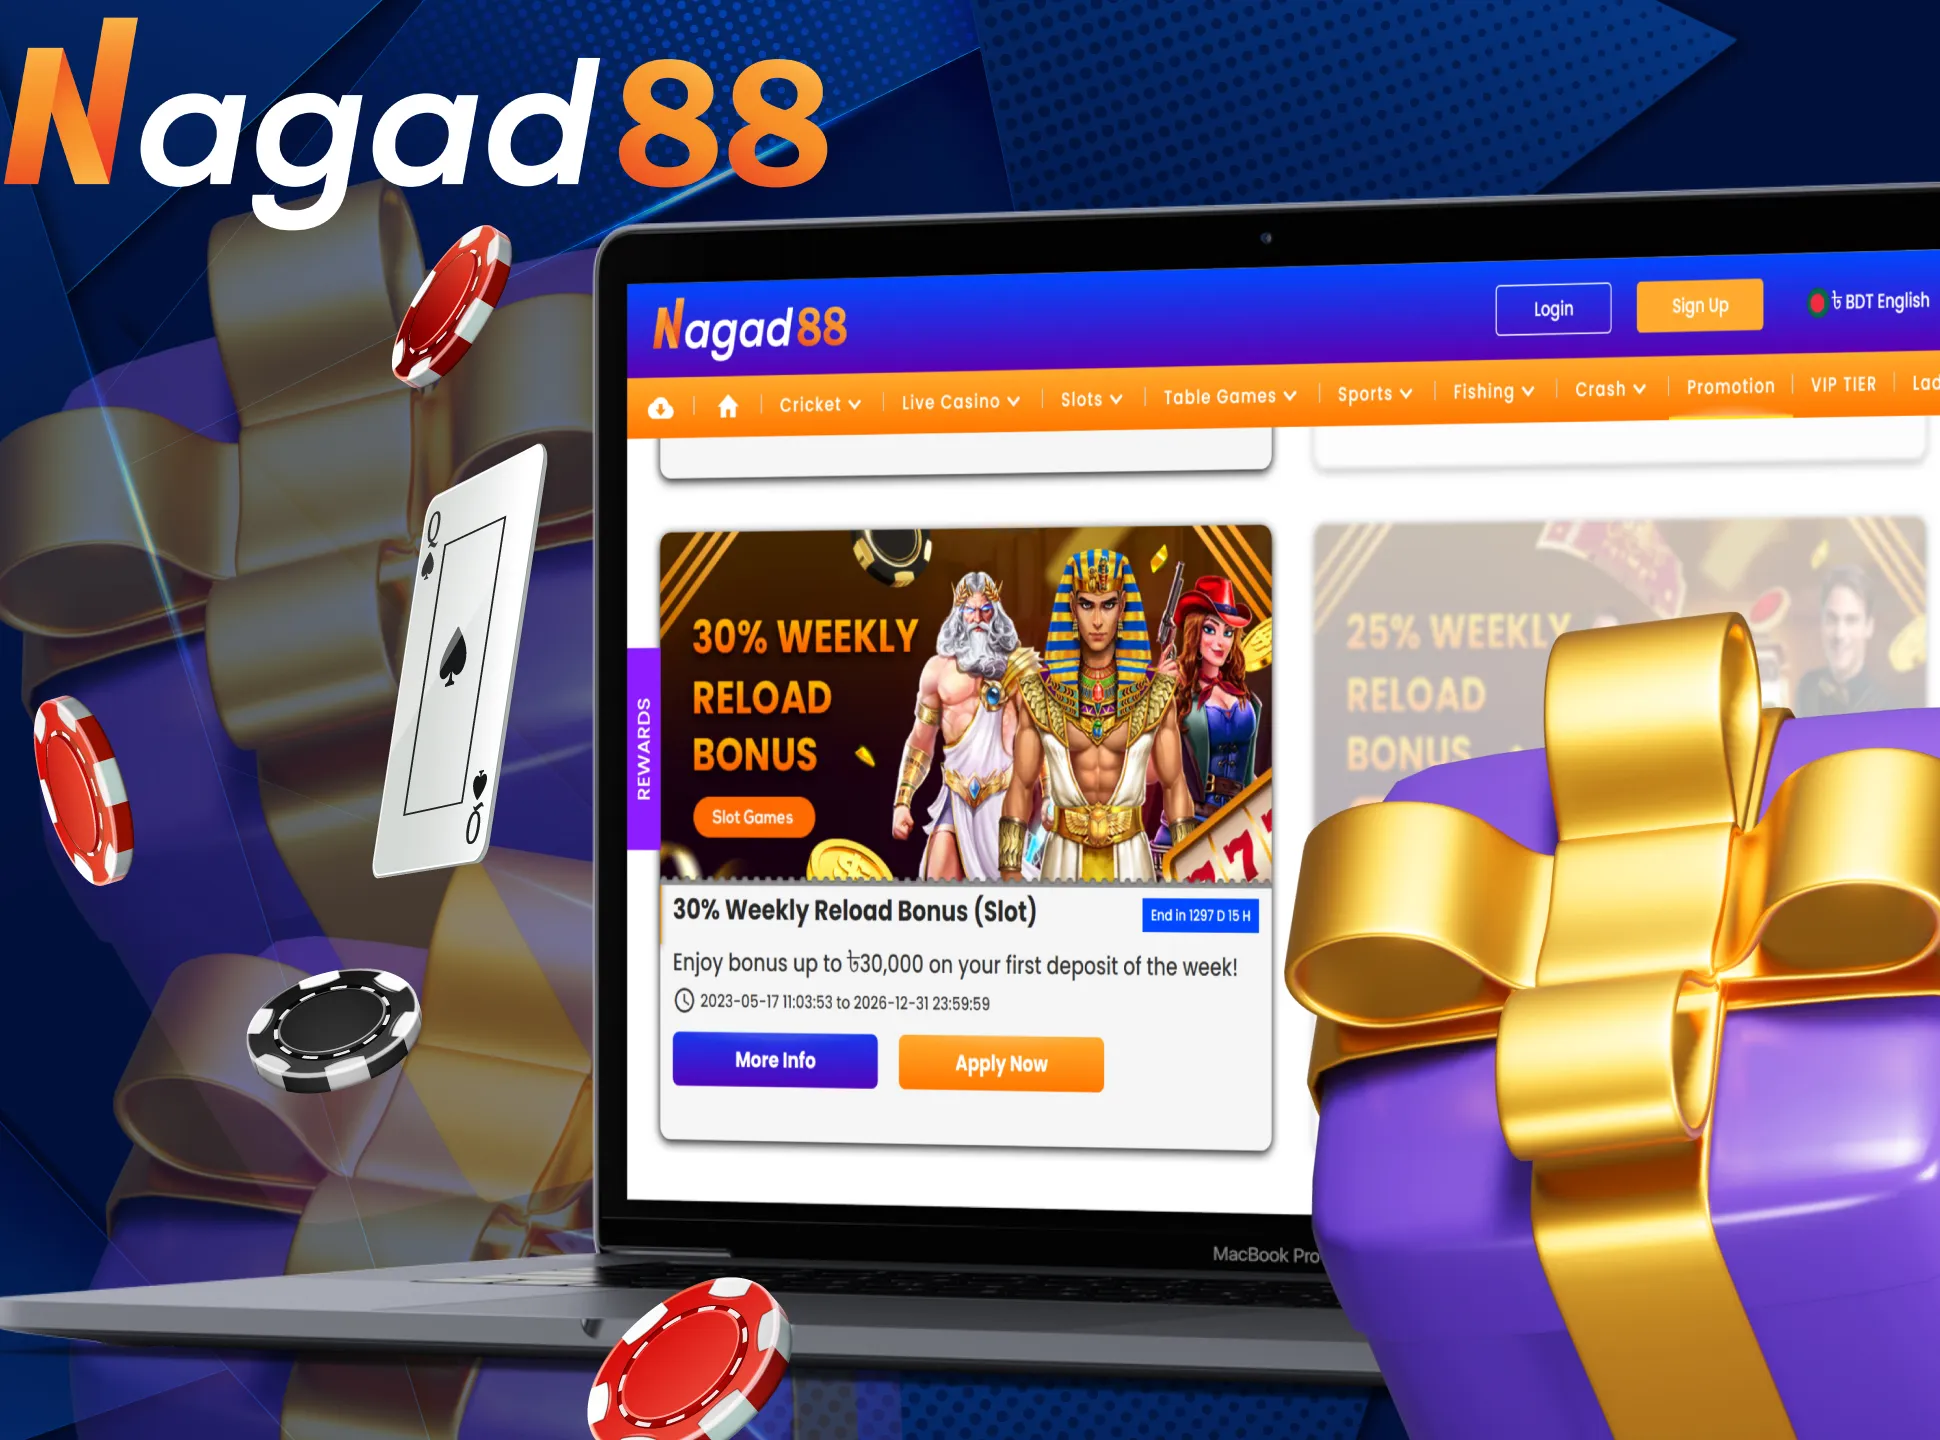 Get Weekly Reload Casino Bonus at Nagad88.